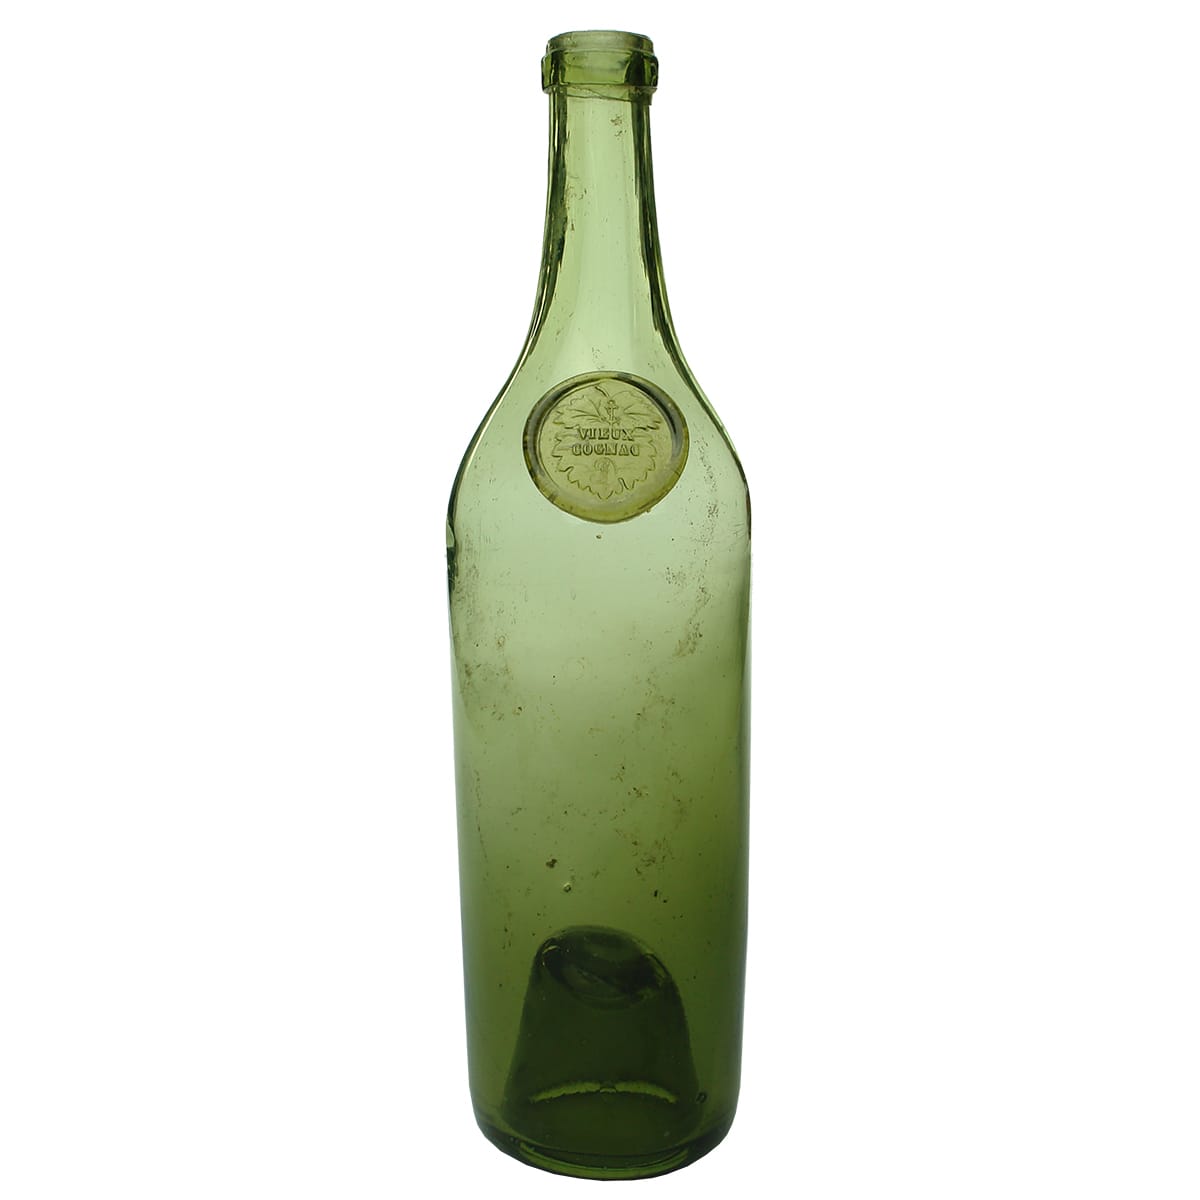 Cognac. Anchor, DJB and Vine Leaf. (Seal glued on this one) Green. 26 oz.